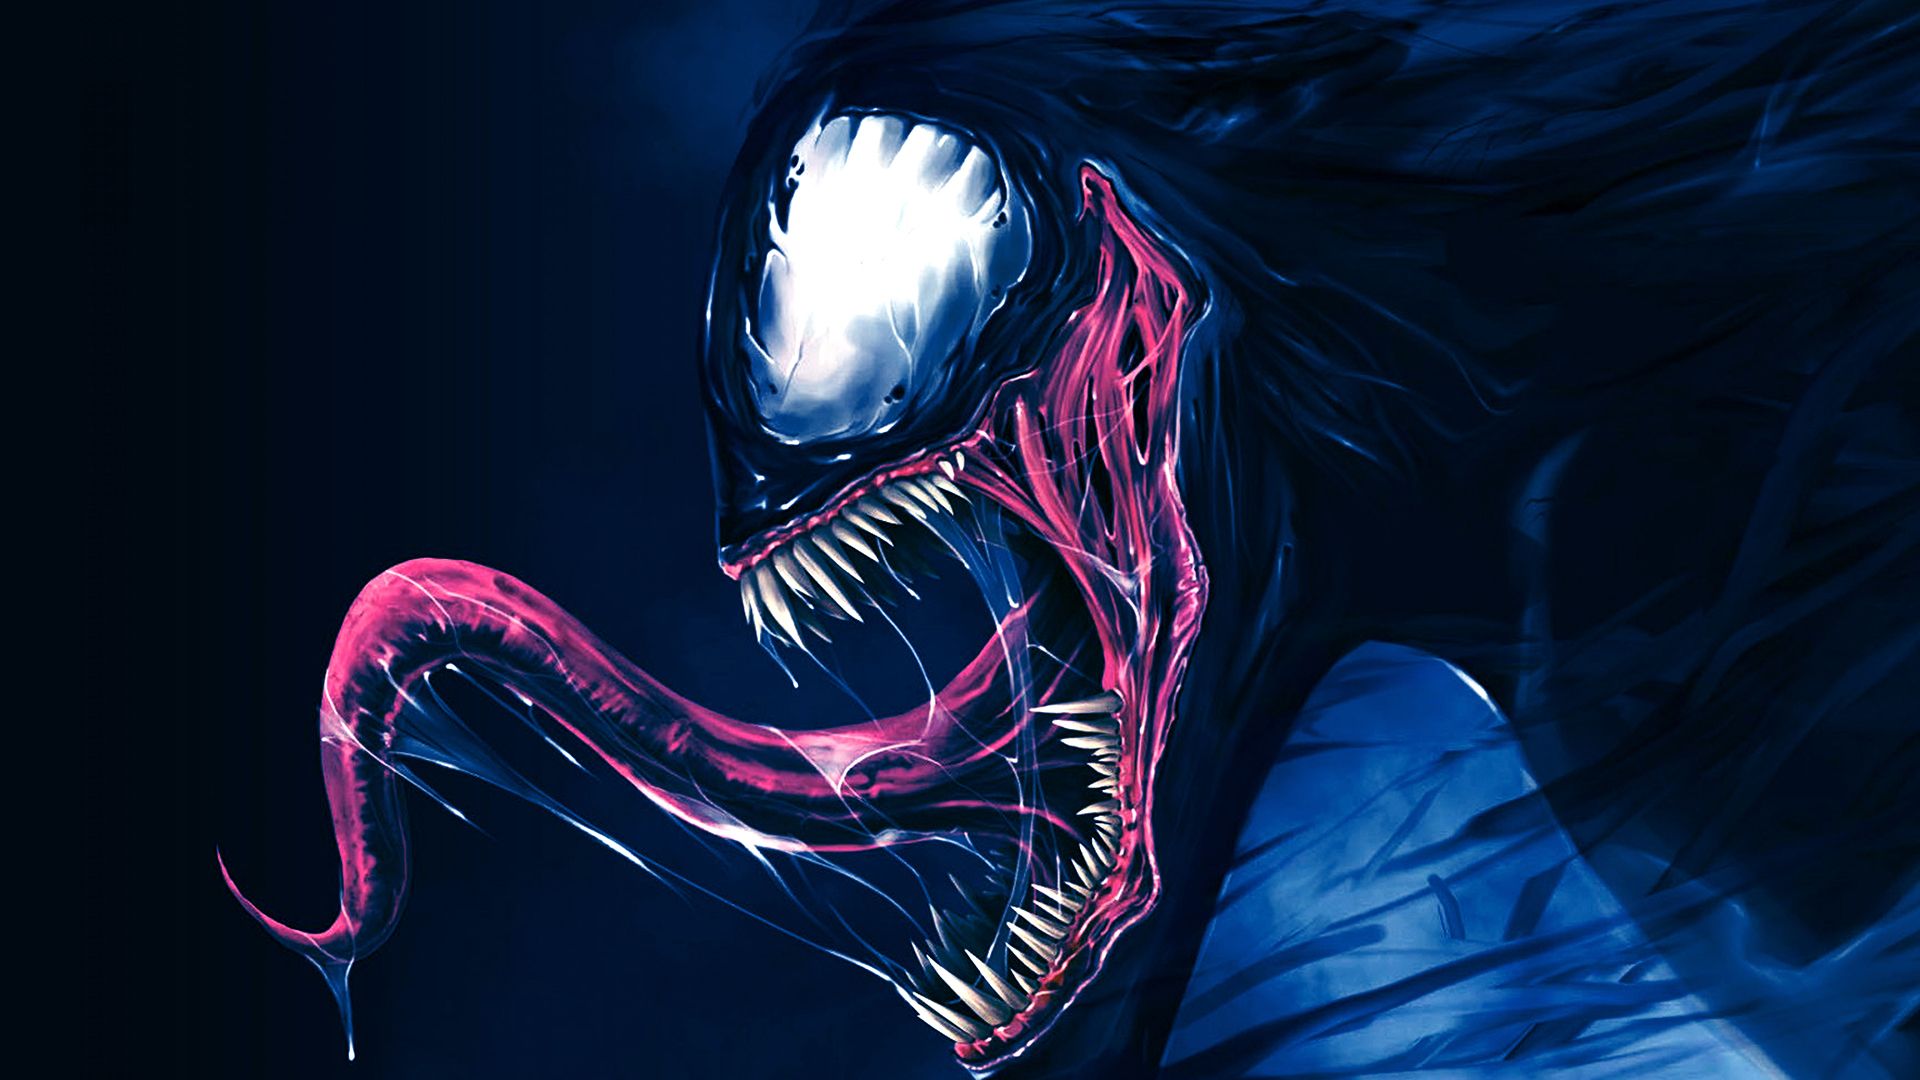 Artwork Venom 1080P Laptop Full HD Wallpaper, HD Movies 4K Wallpaper, Image, Photo and Background